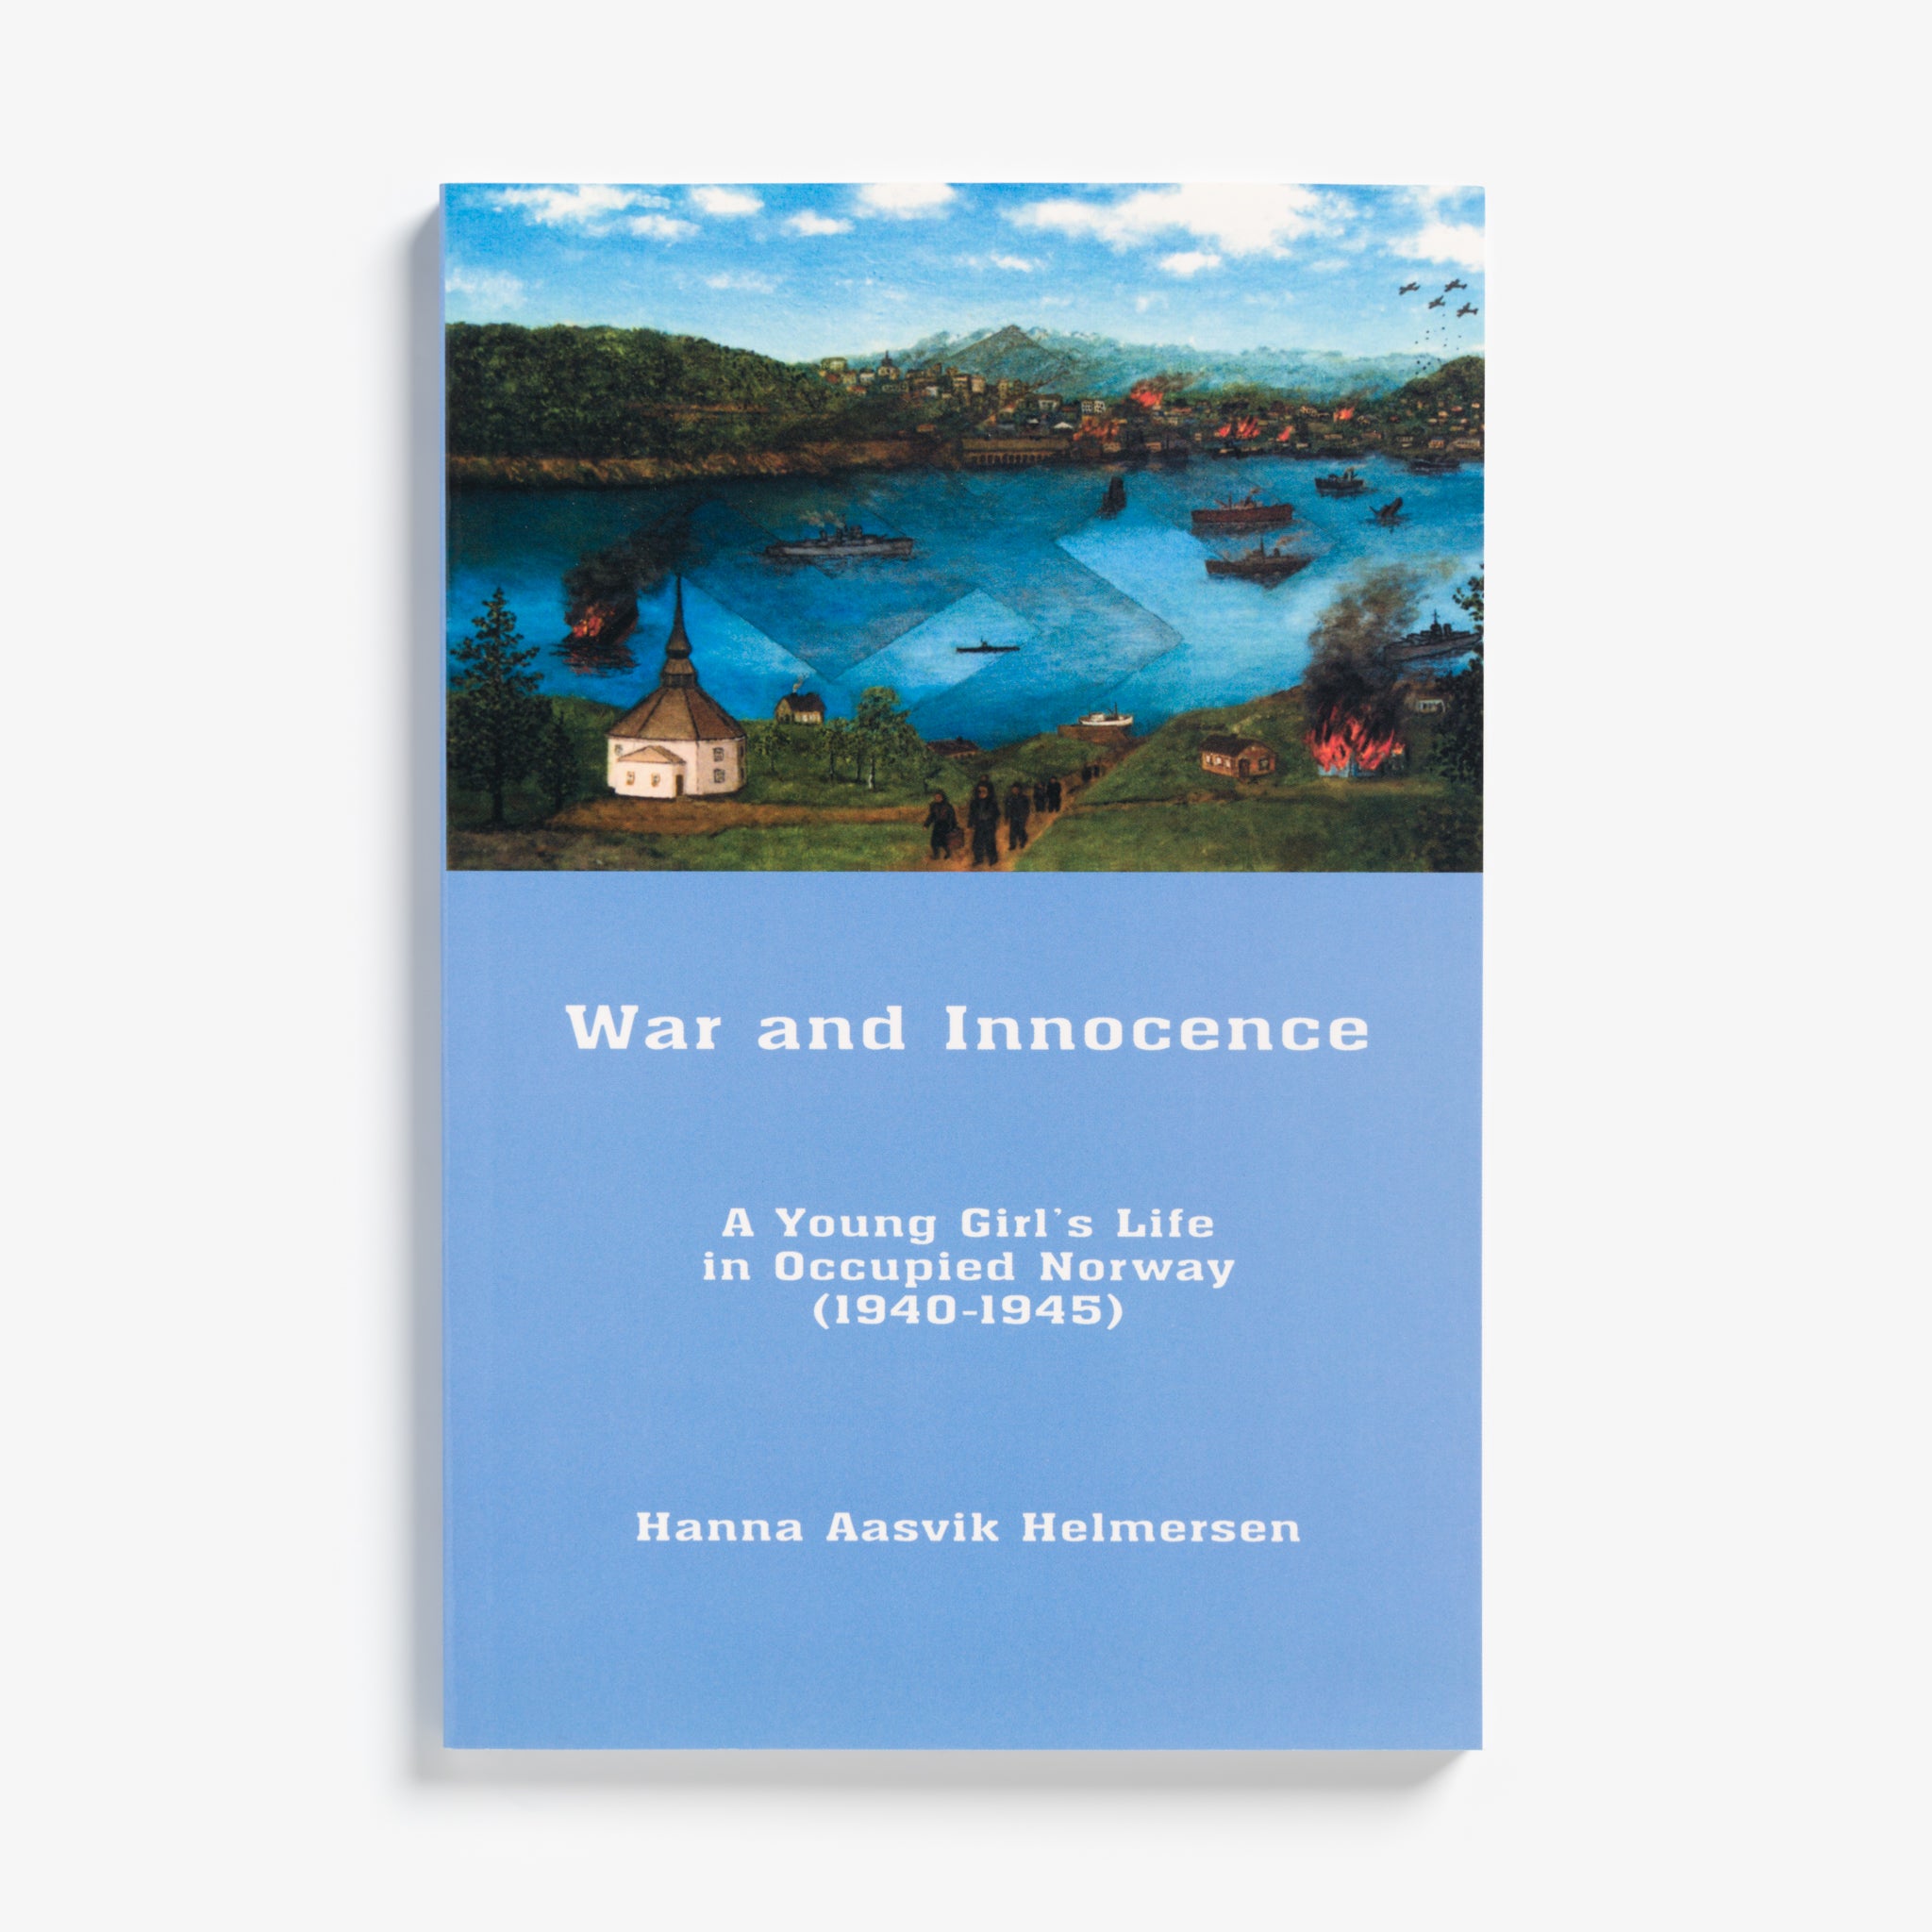 War and Innocence by Hanna Aasvik Helmersen